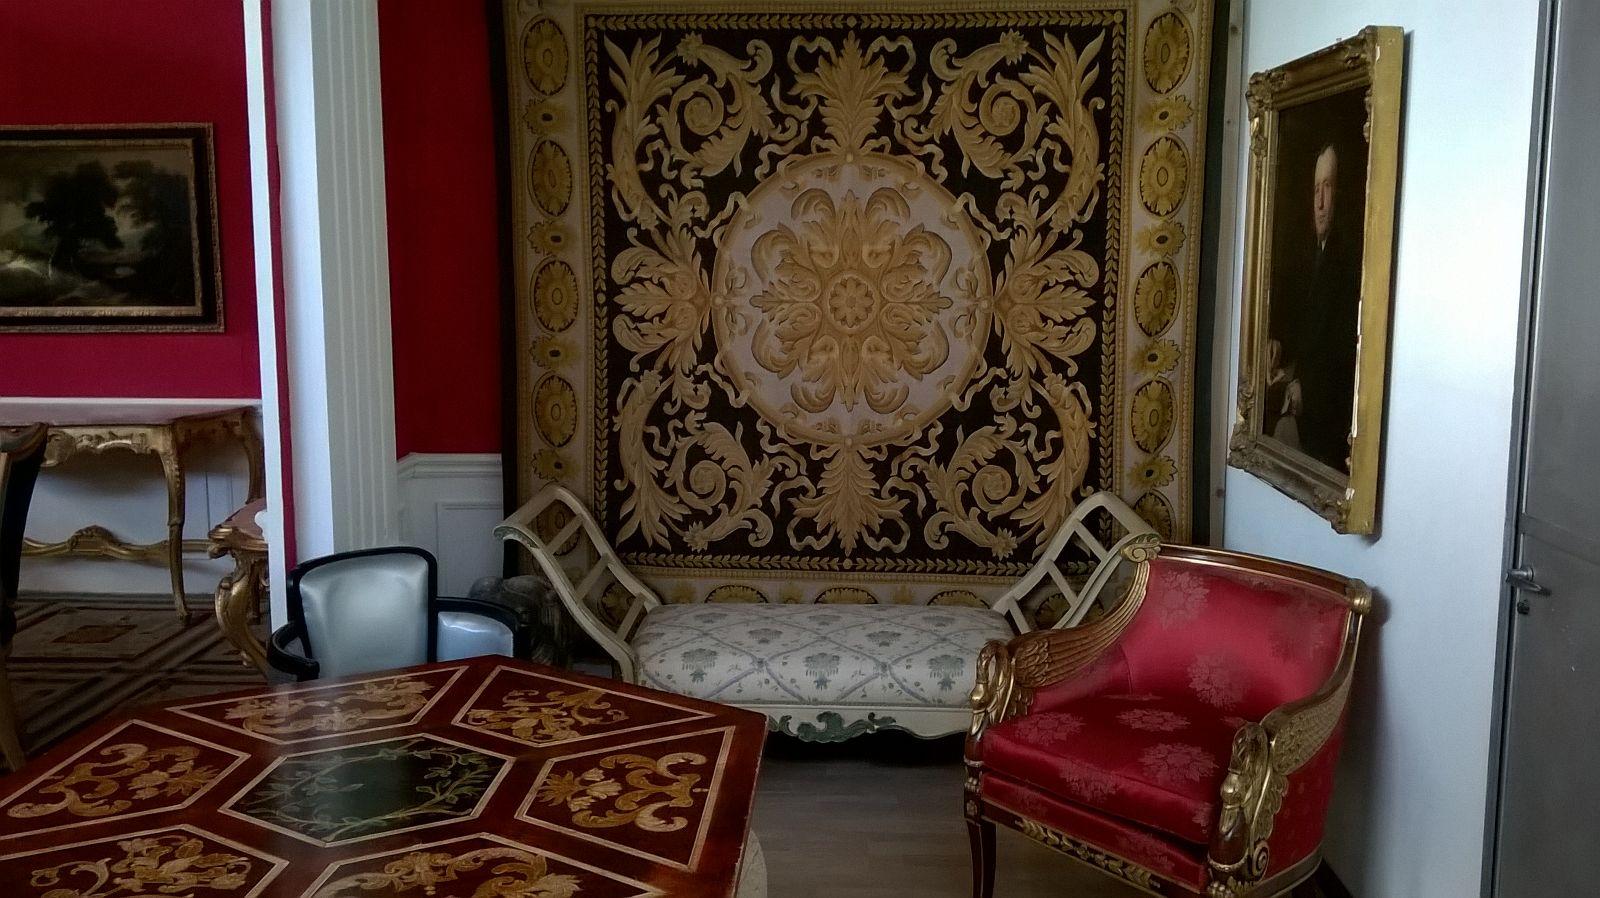 Large French Aubusson carpet 20th century. (Size: 240 cm x 240 cm)
Manufactured Roja Sahrai Revs de Desert - Secret du luxe
The piece has the rights to reproduce the carpets of the Louvre museum.